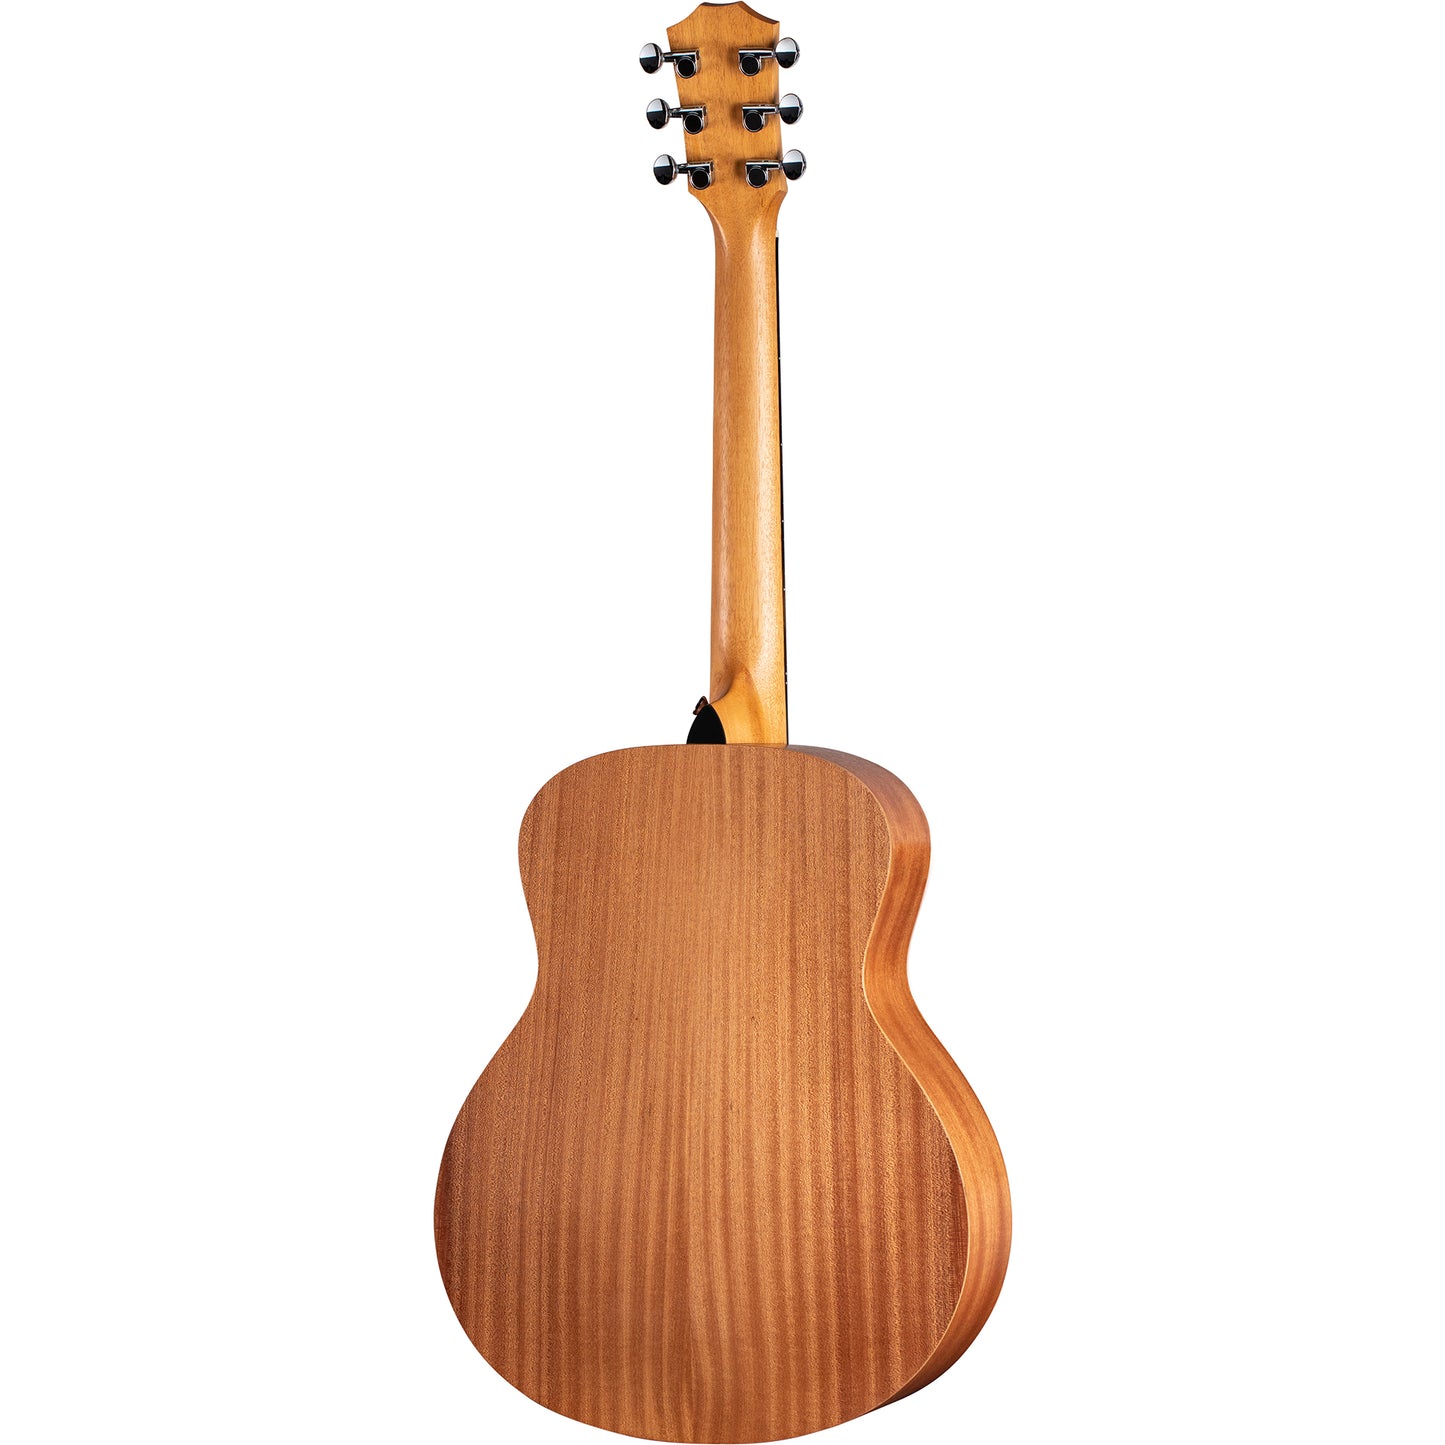 Taylor GS Mini Mahogany Acoustic Guitar